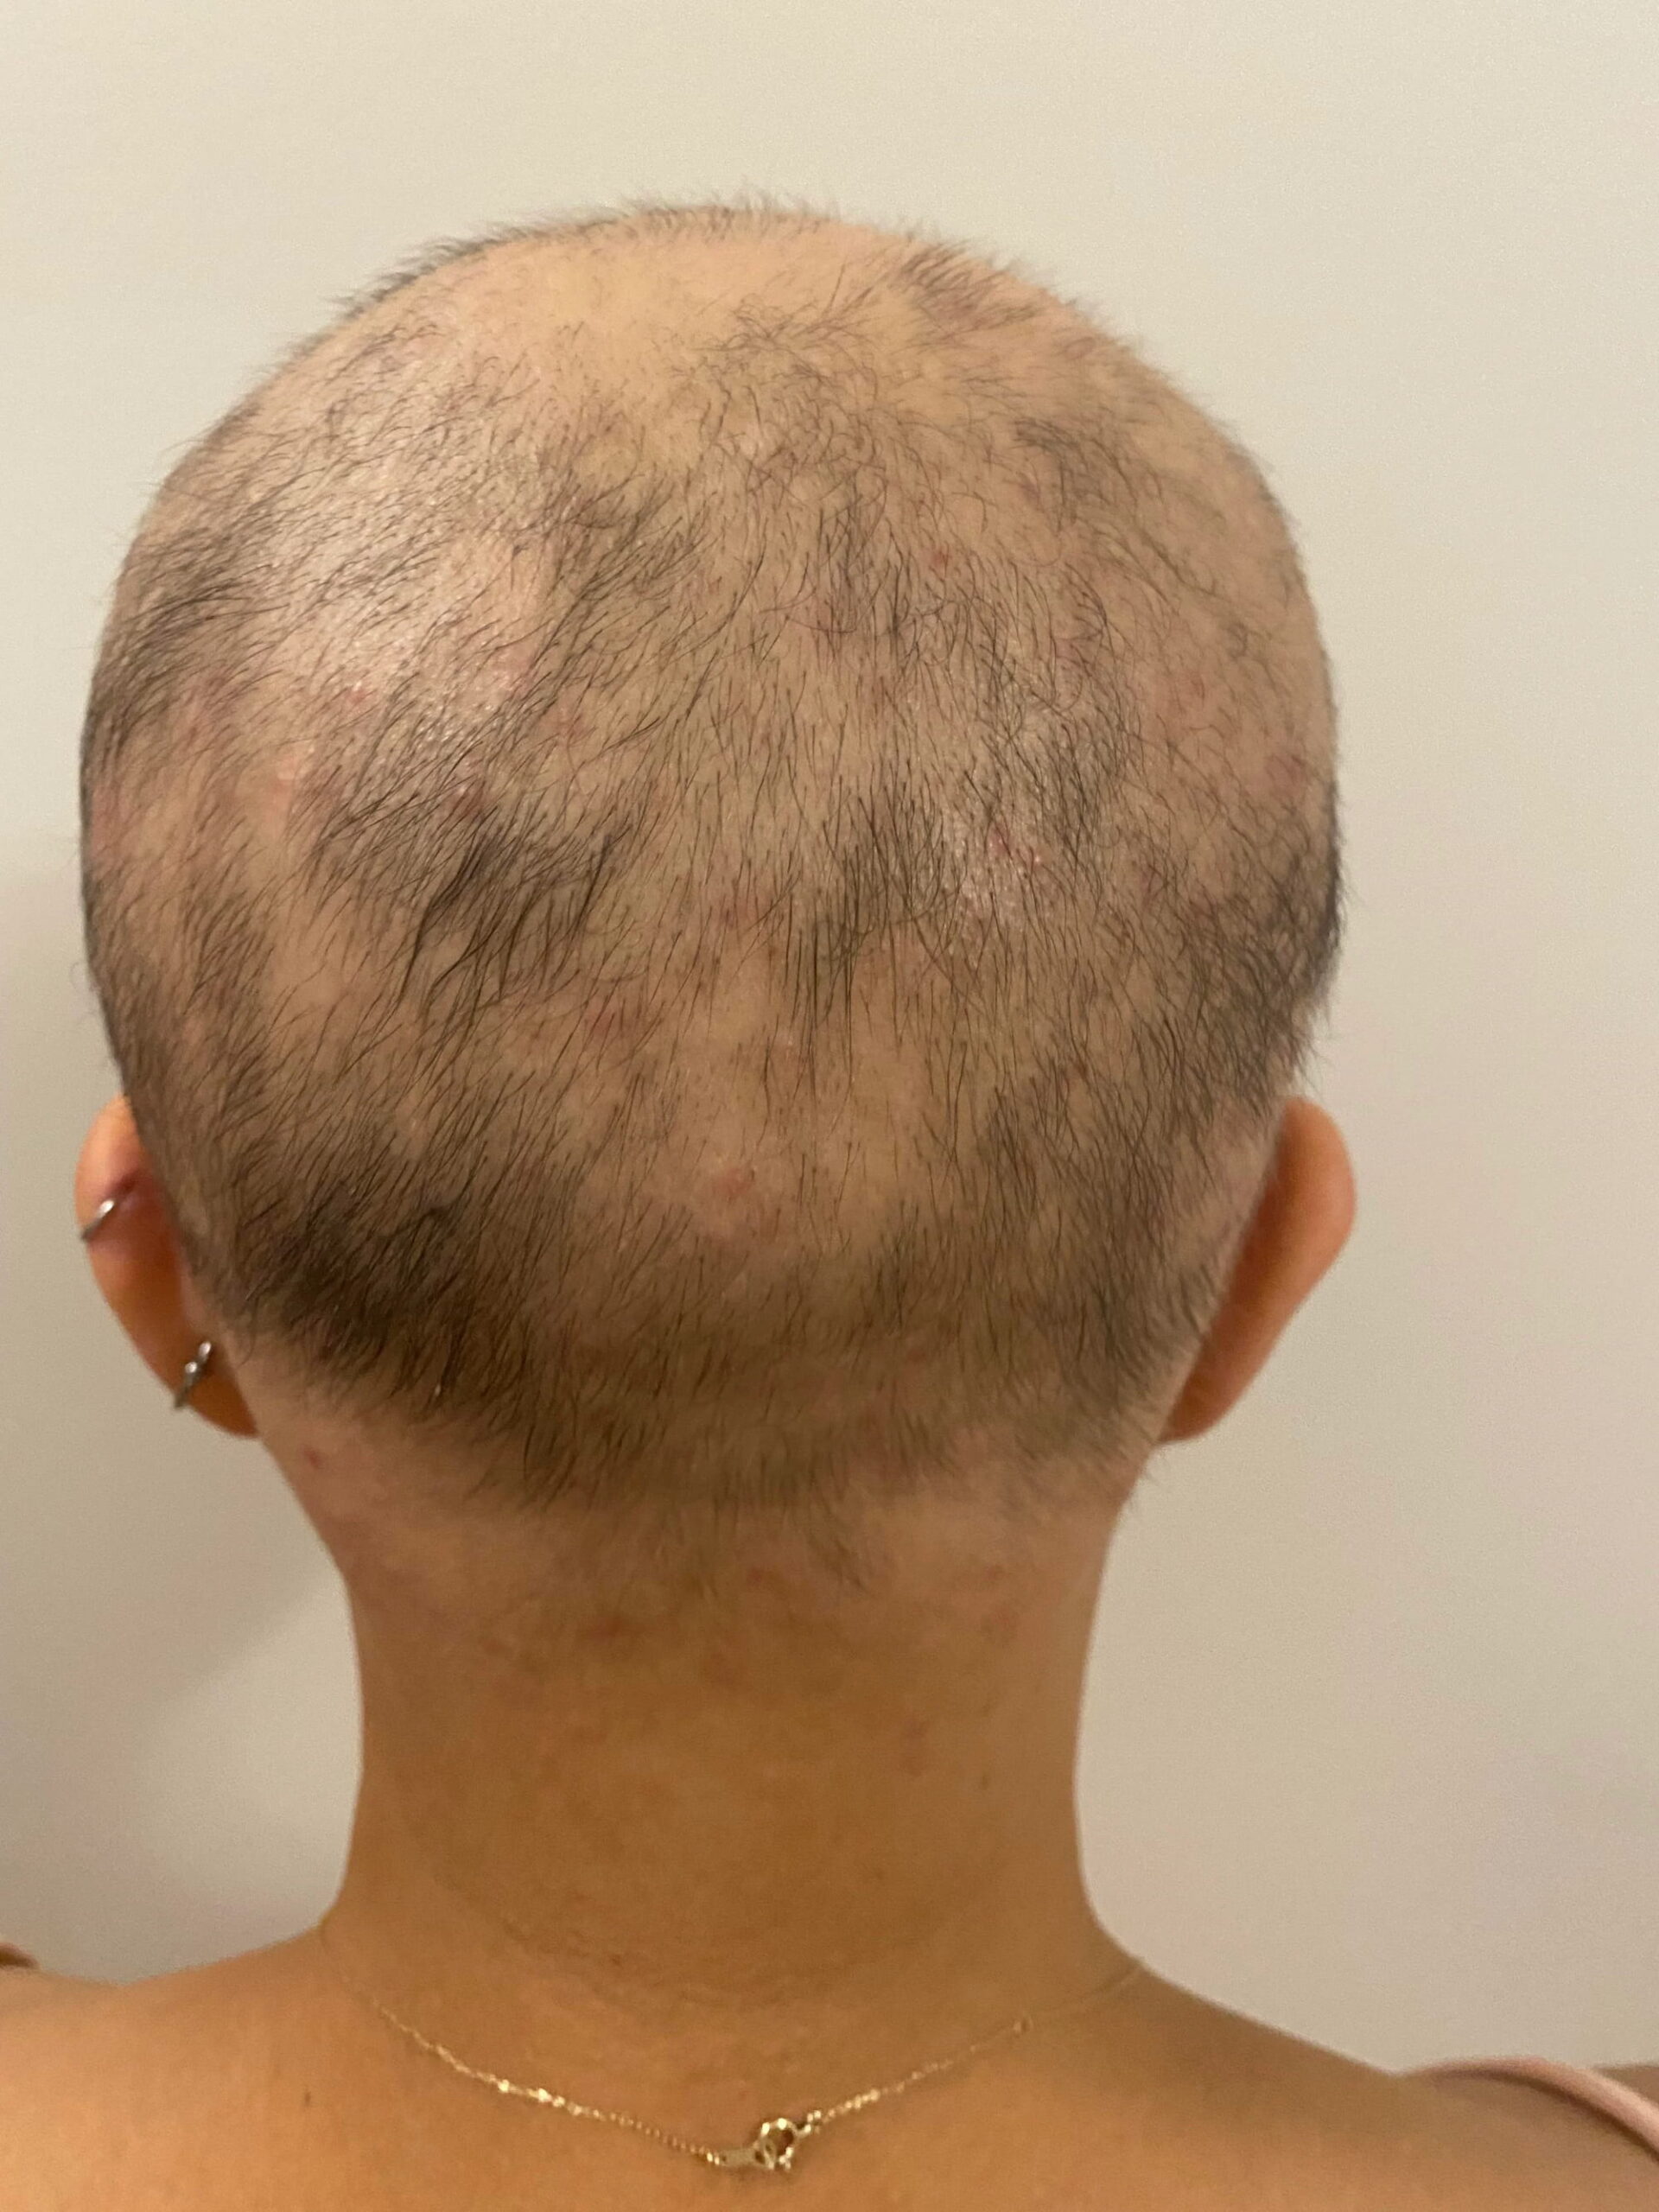 deuruxolitinib alopecia areata results 07 scaled - Alopecia Areata Treatment: What Future Holds